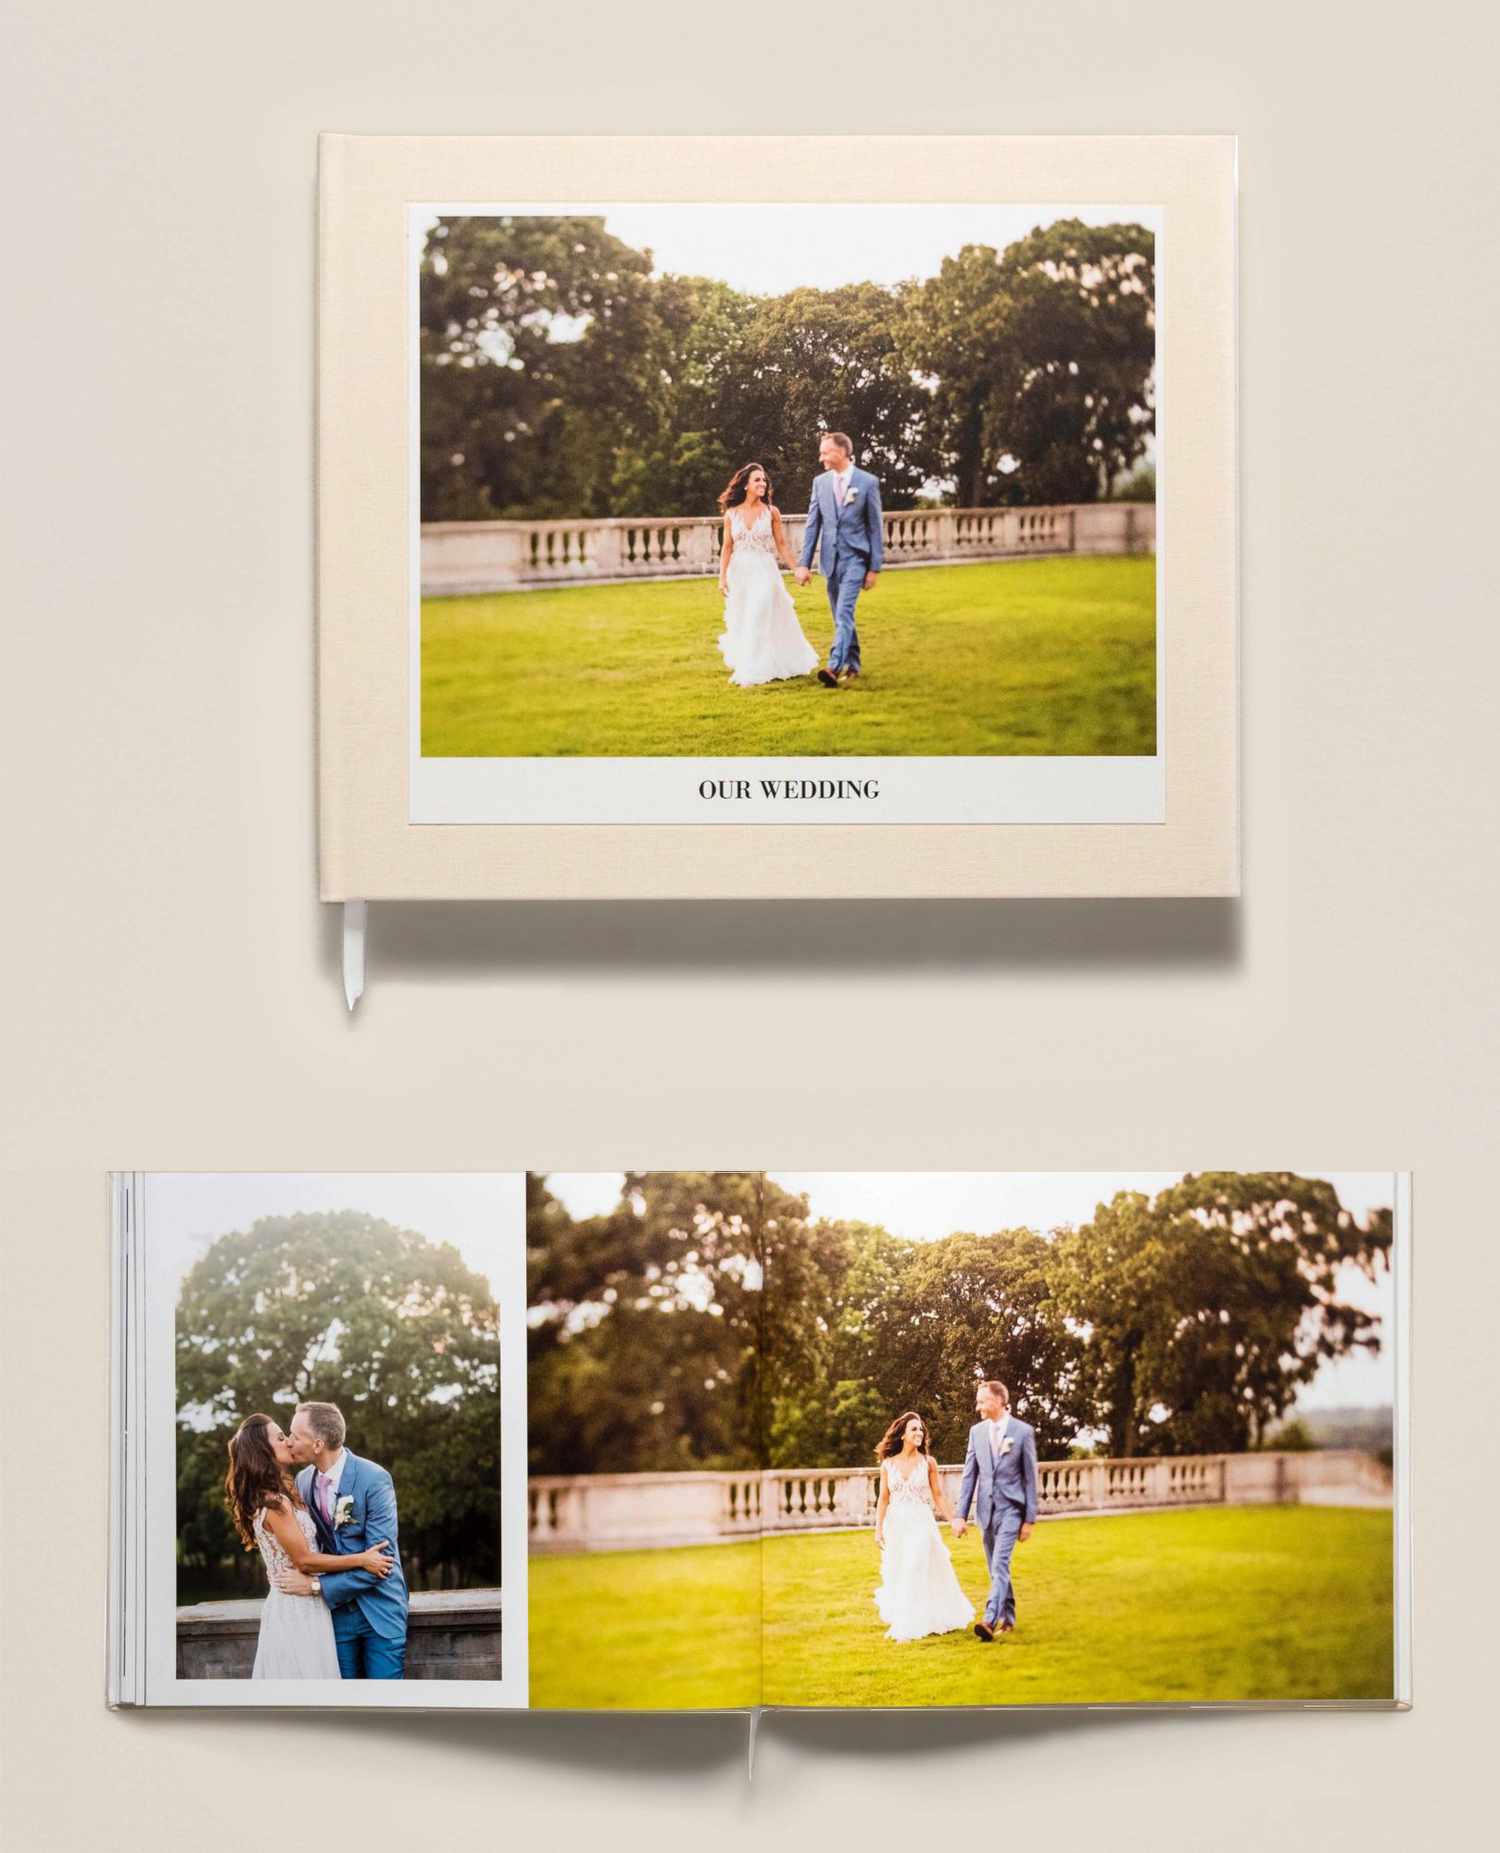 wedding photo albums hardback cover open book below